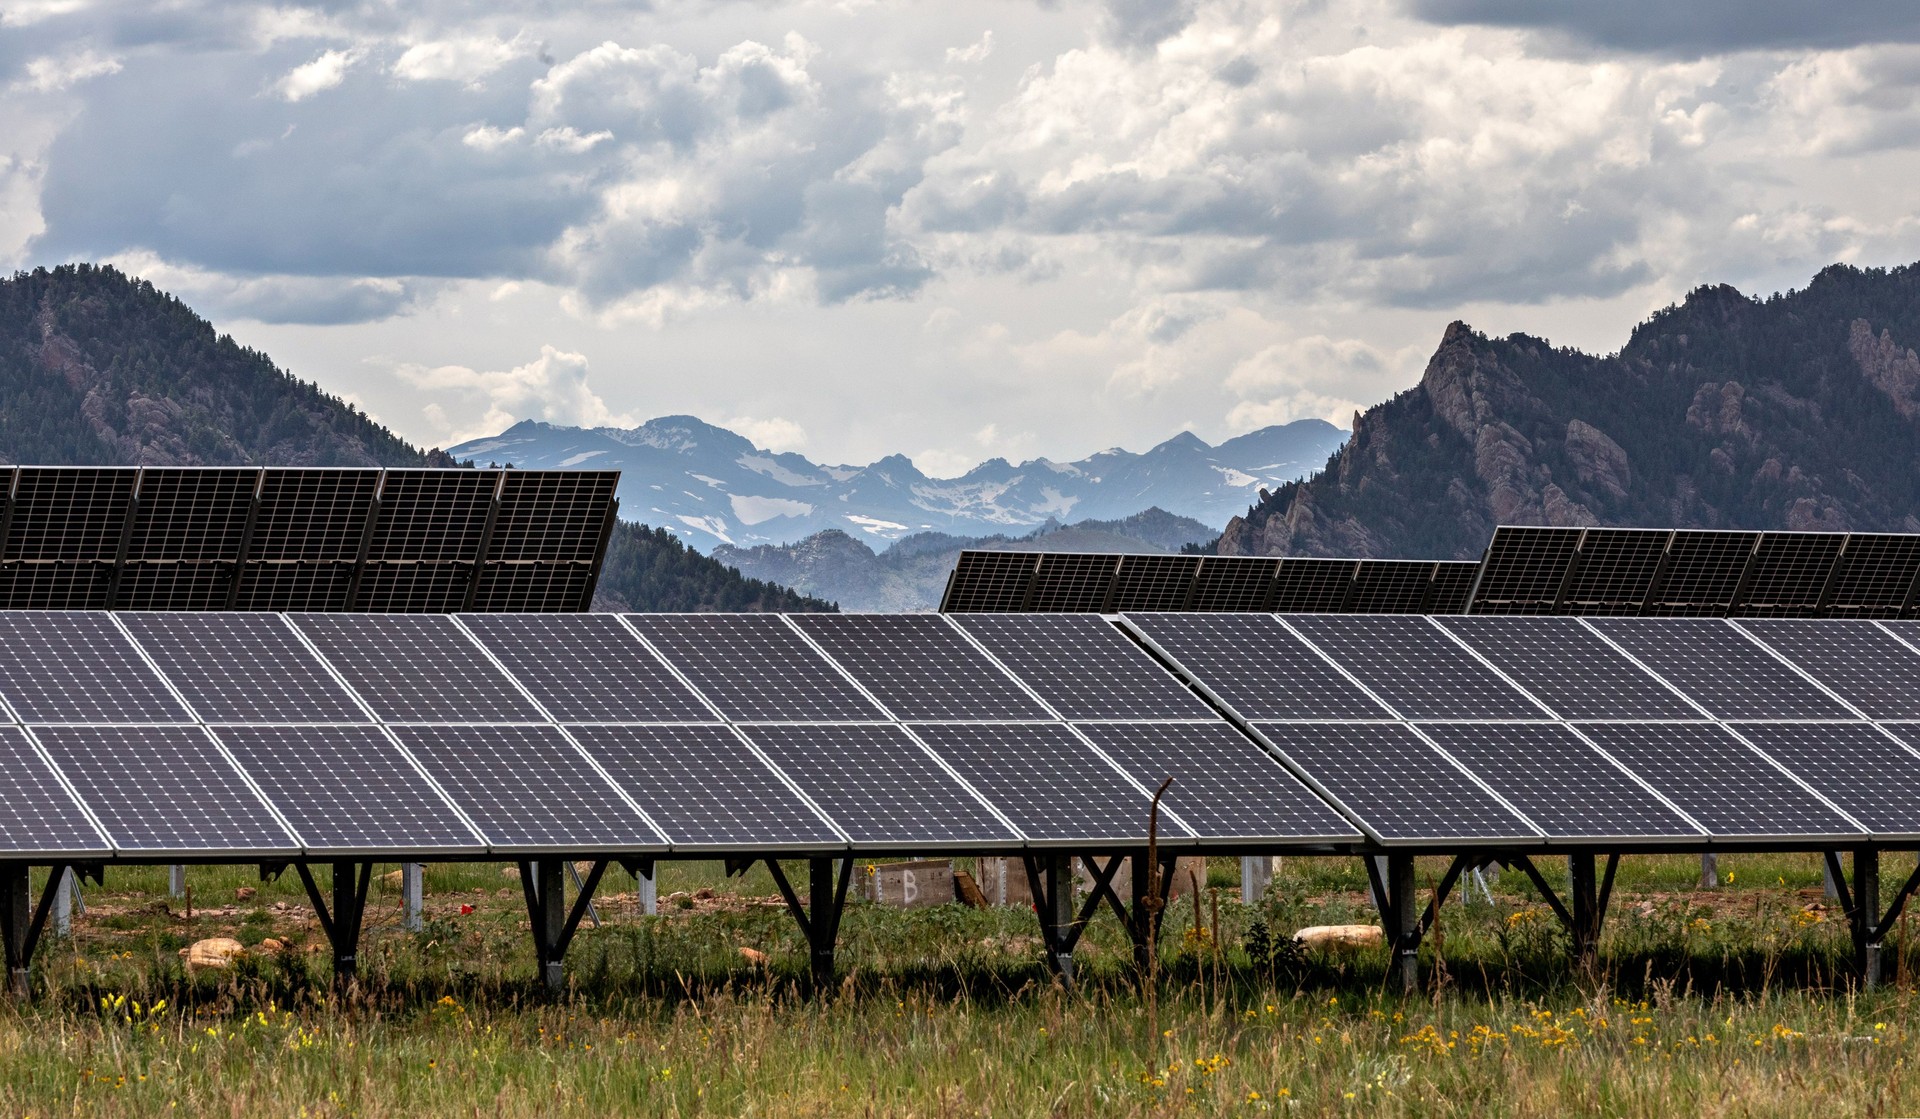 Solar panels at the National Renewable Energy Laboratory